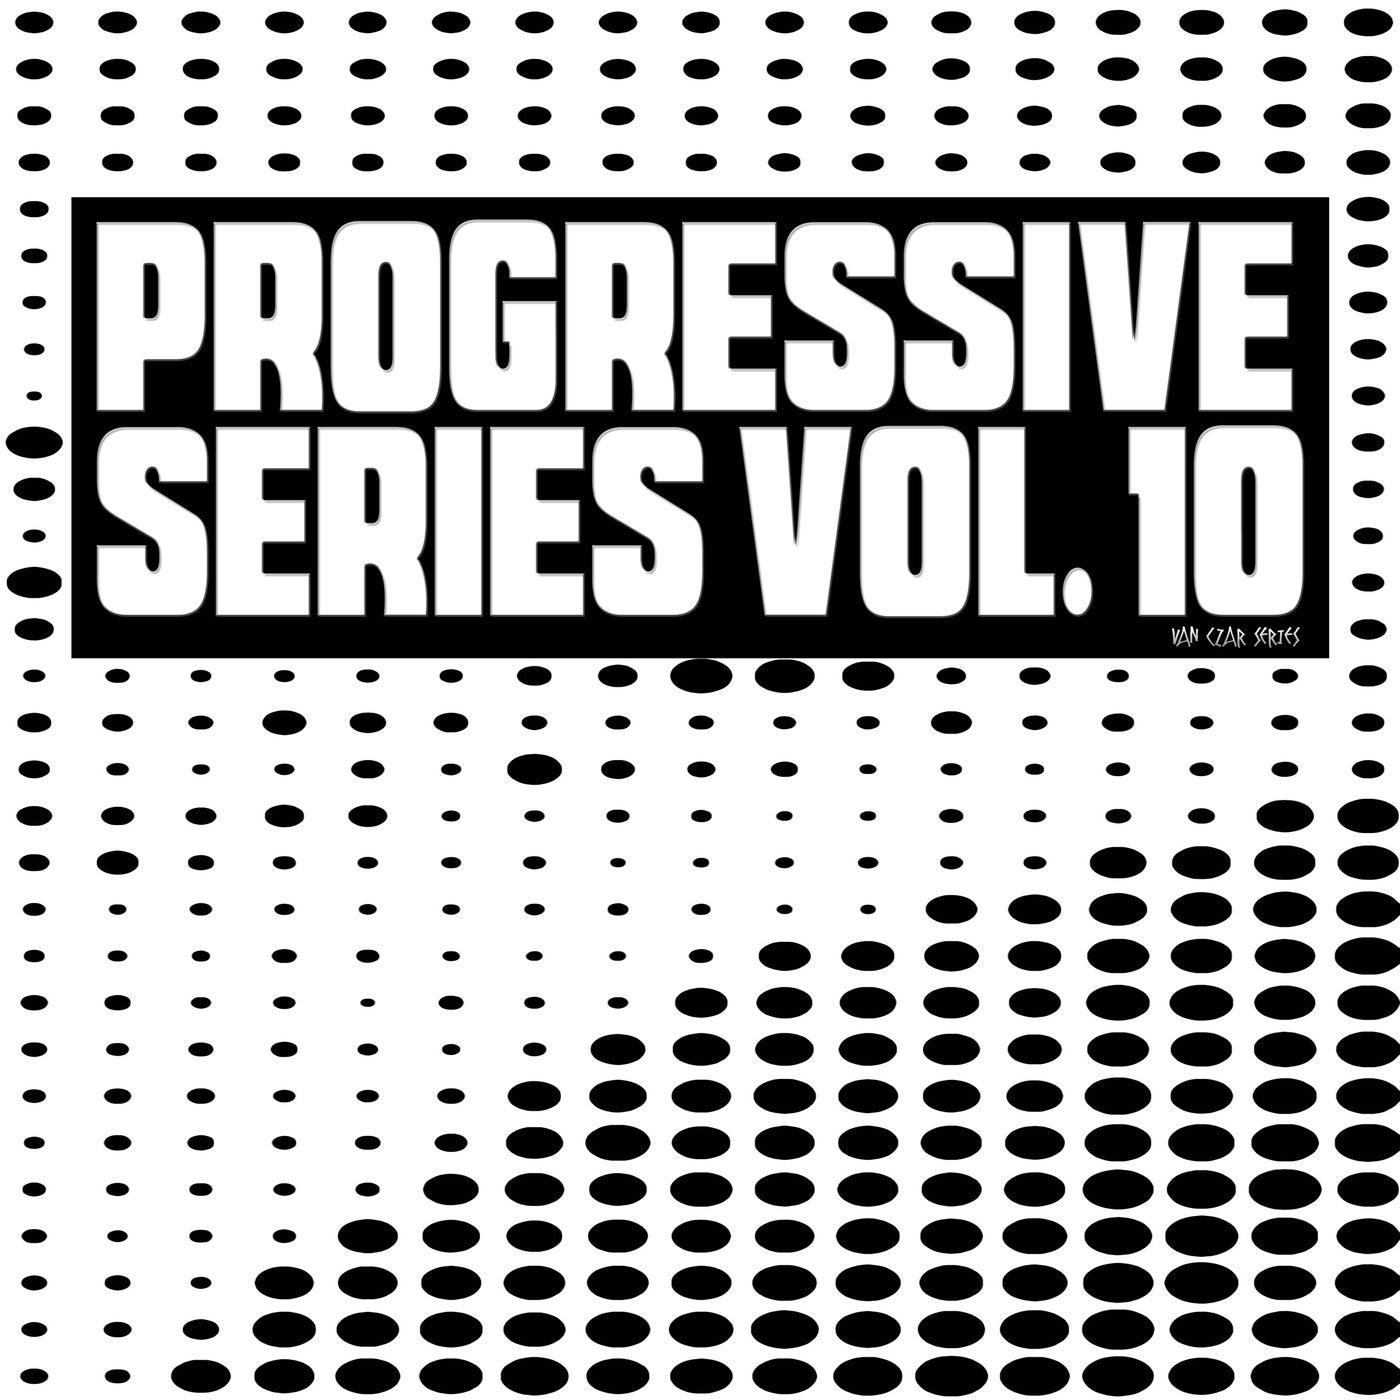 Progressive Series, Vol. 10